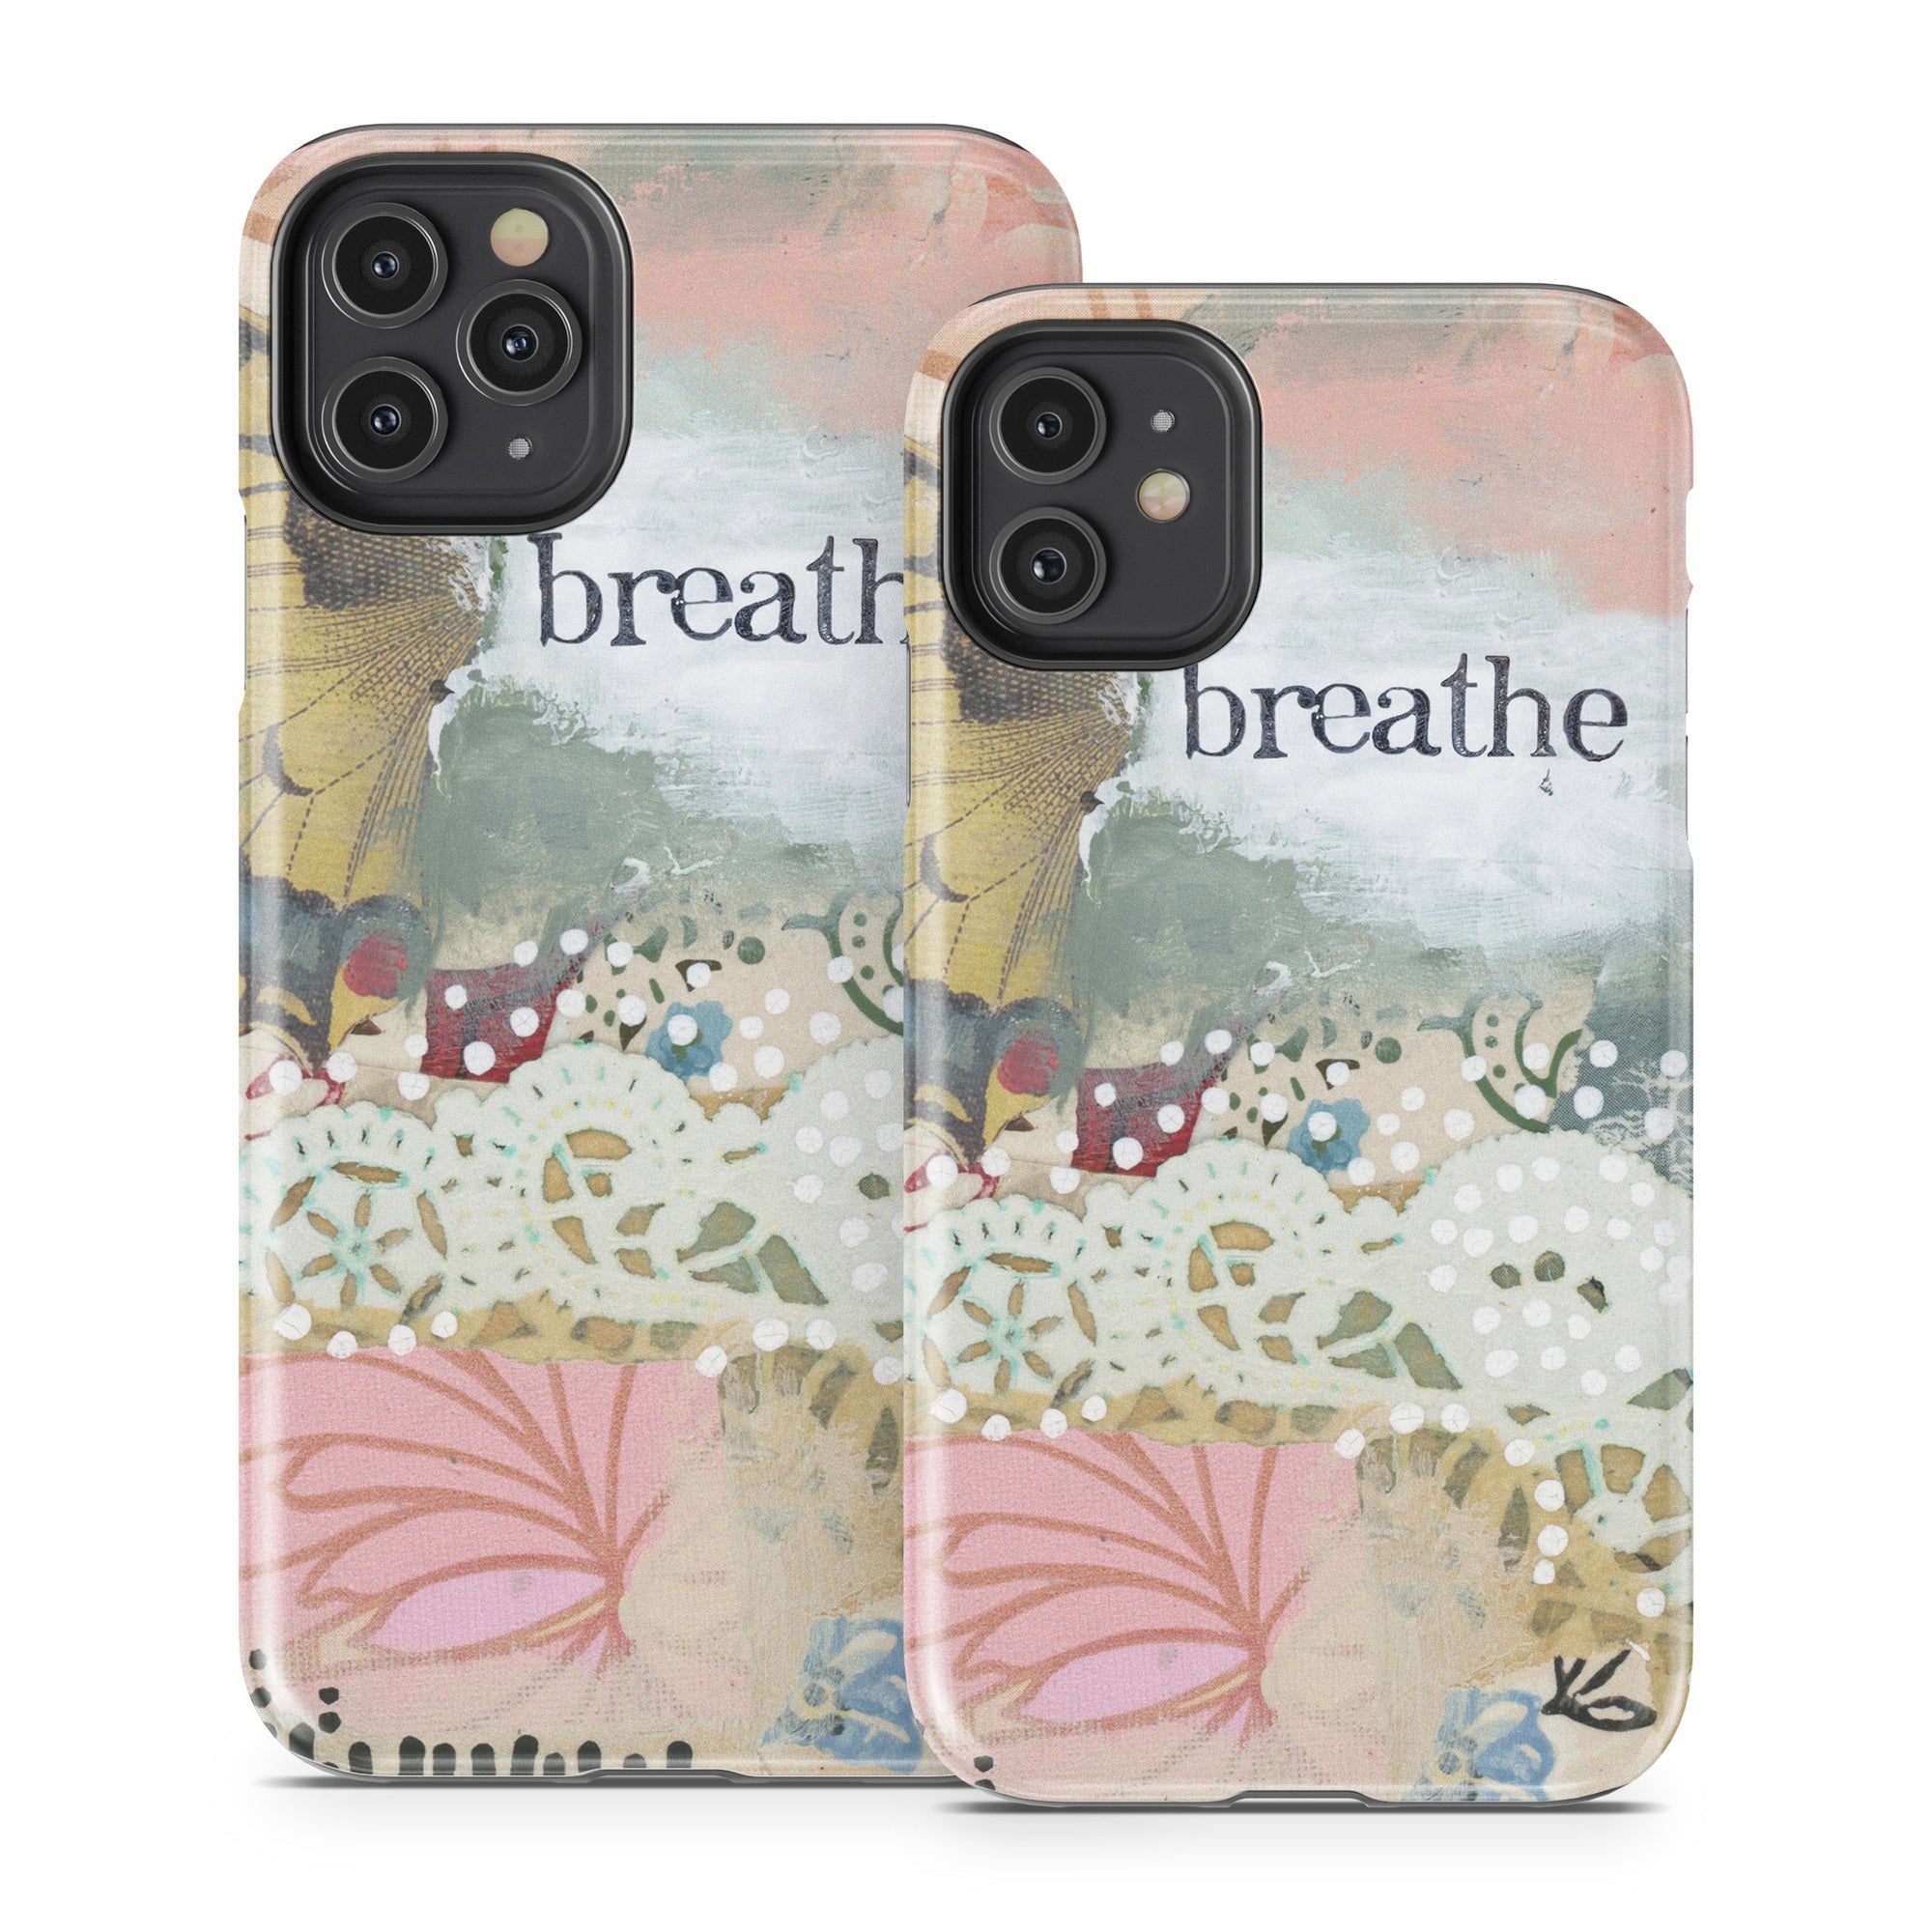 Breathe - Apple iPhone 11 Tough Case